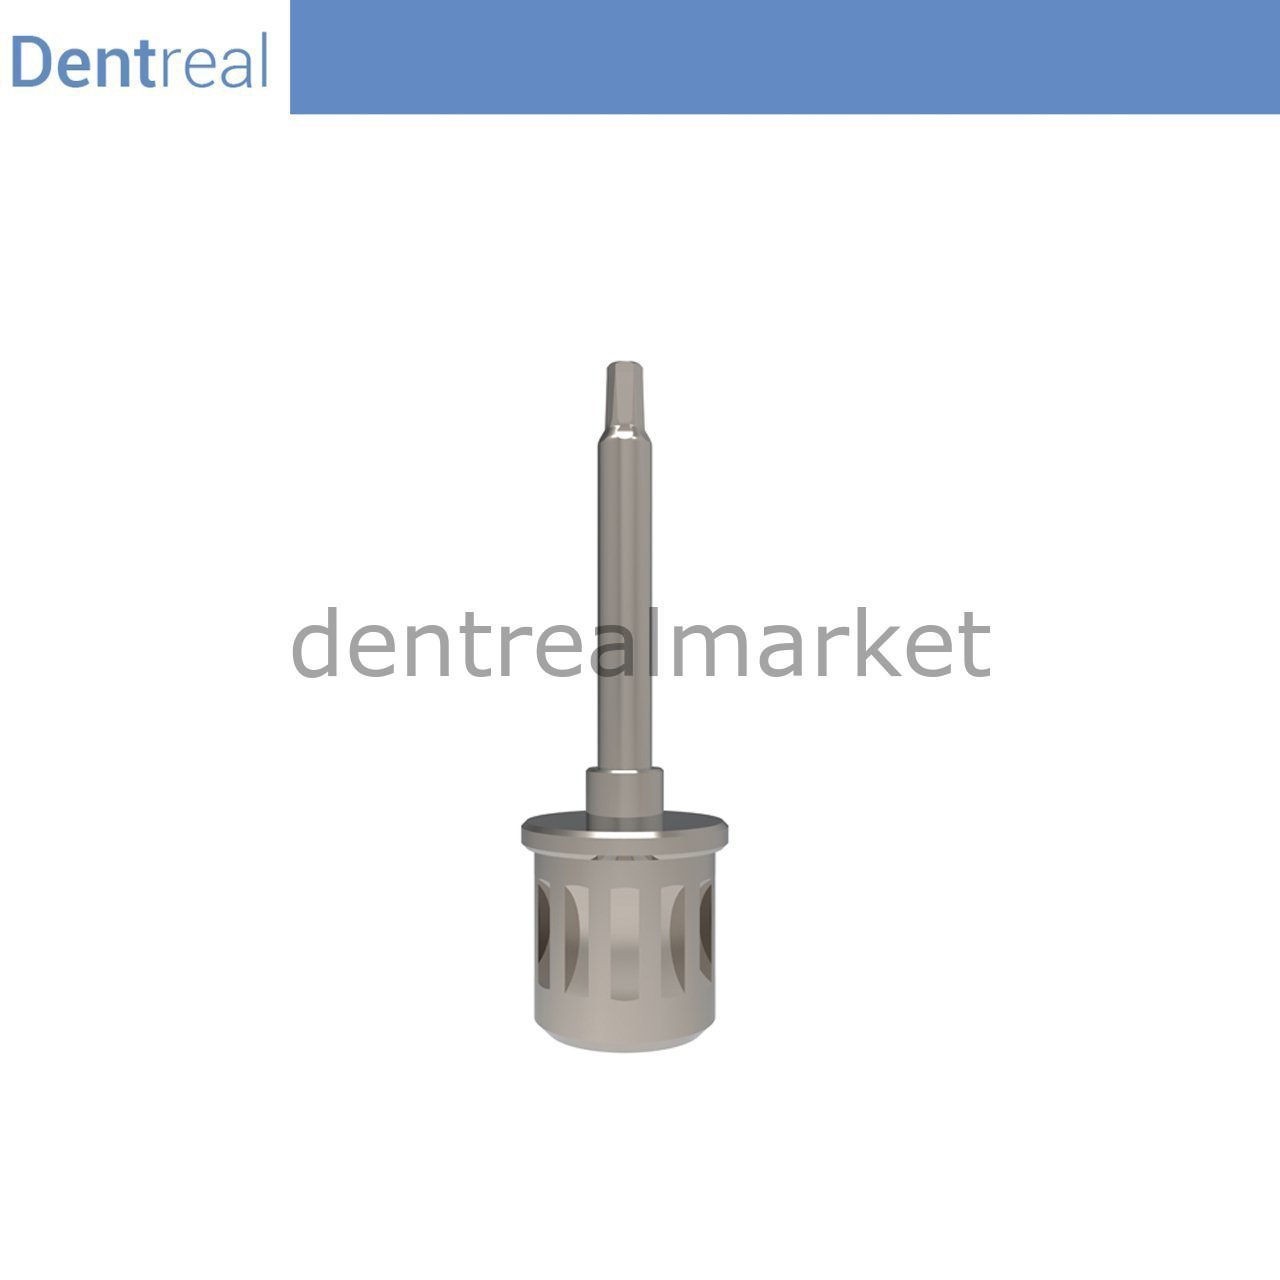 DentrealStore - Dentreal Screwdriver for Biohorizons Implant - 1,27 - 1,28 mm Hex Driver